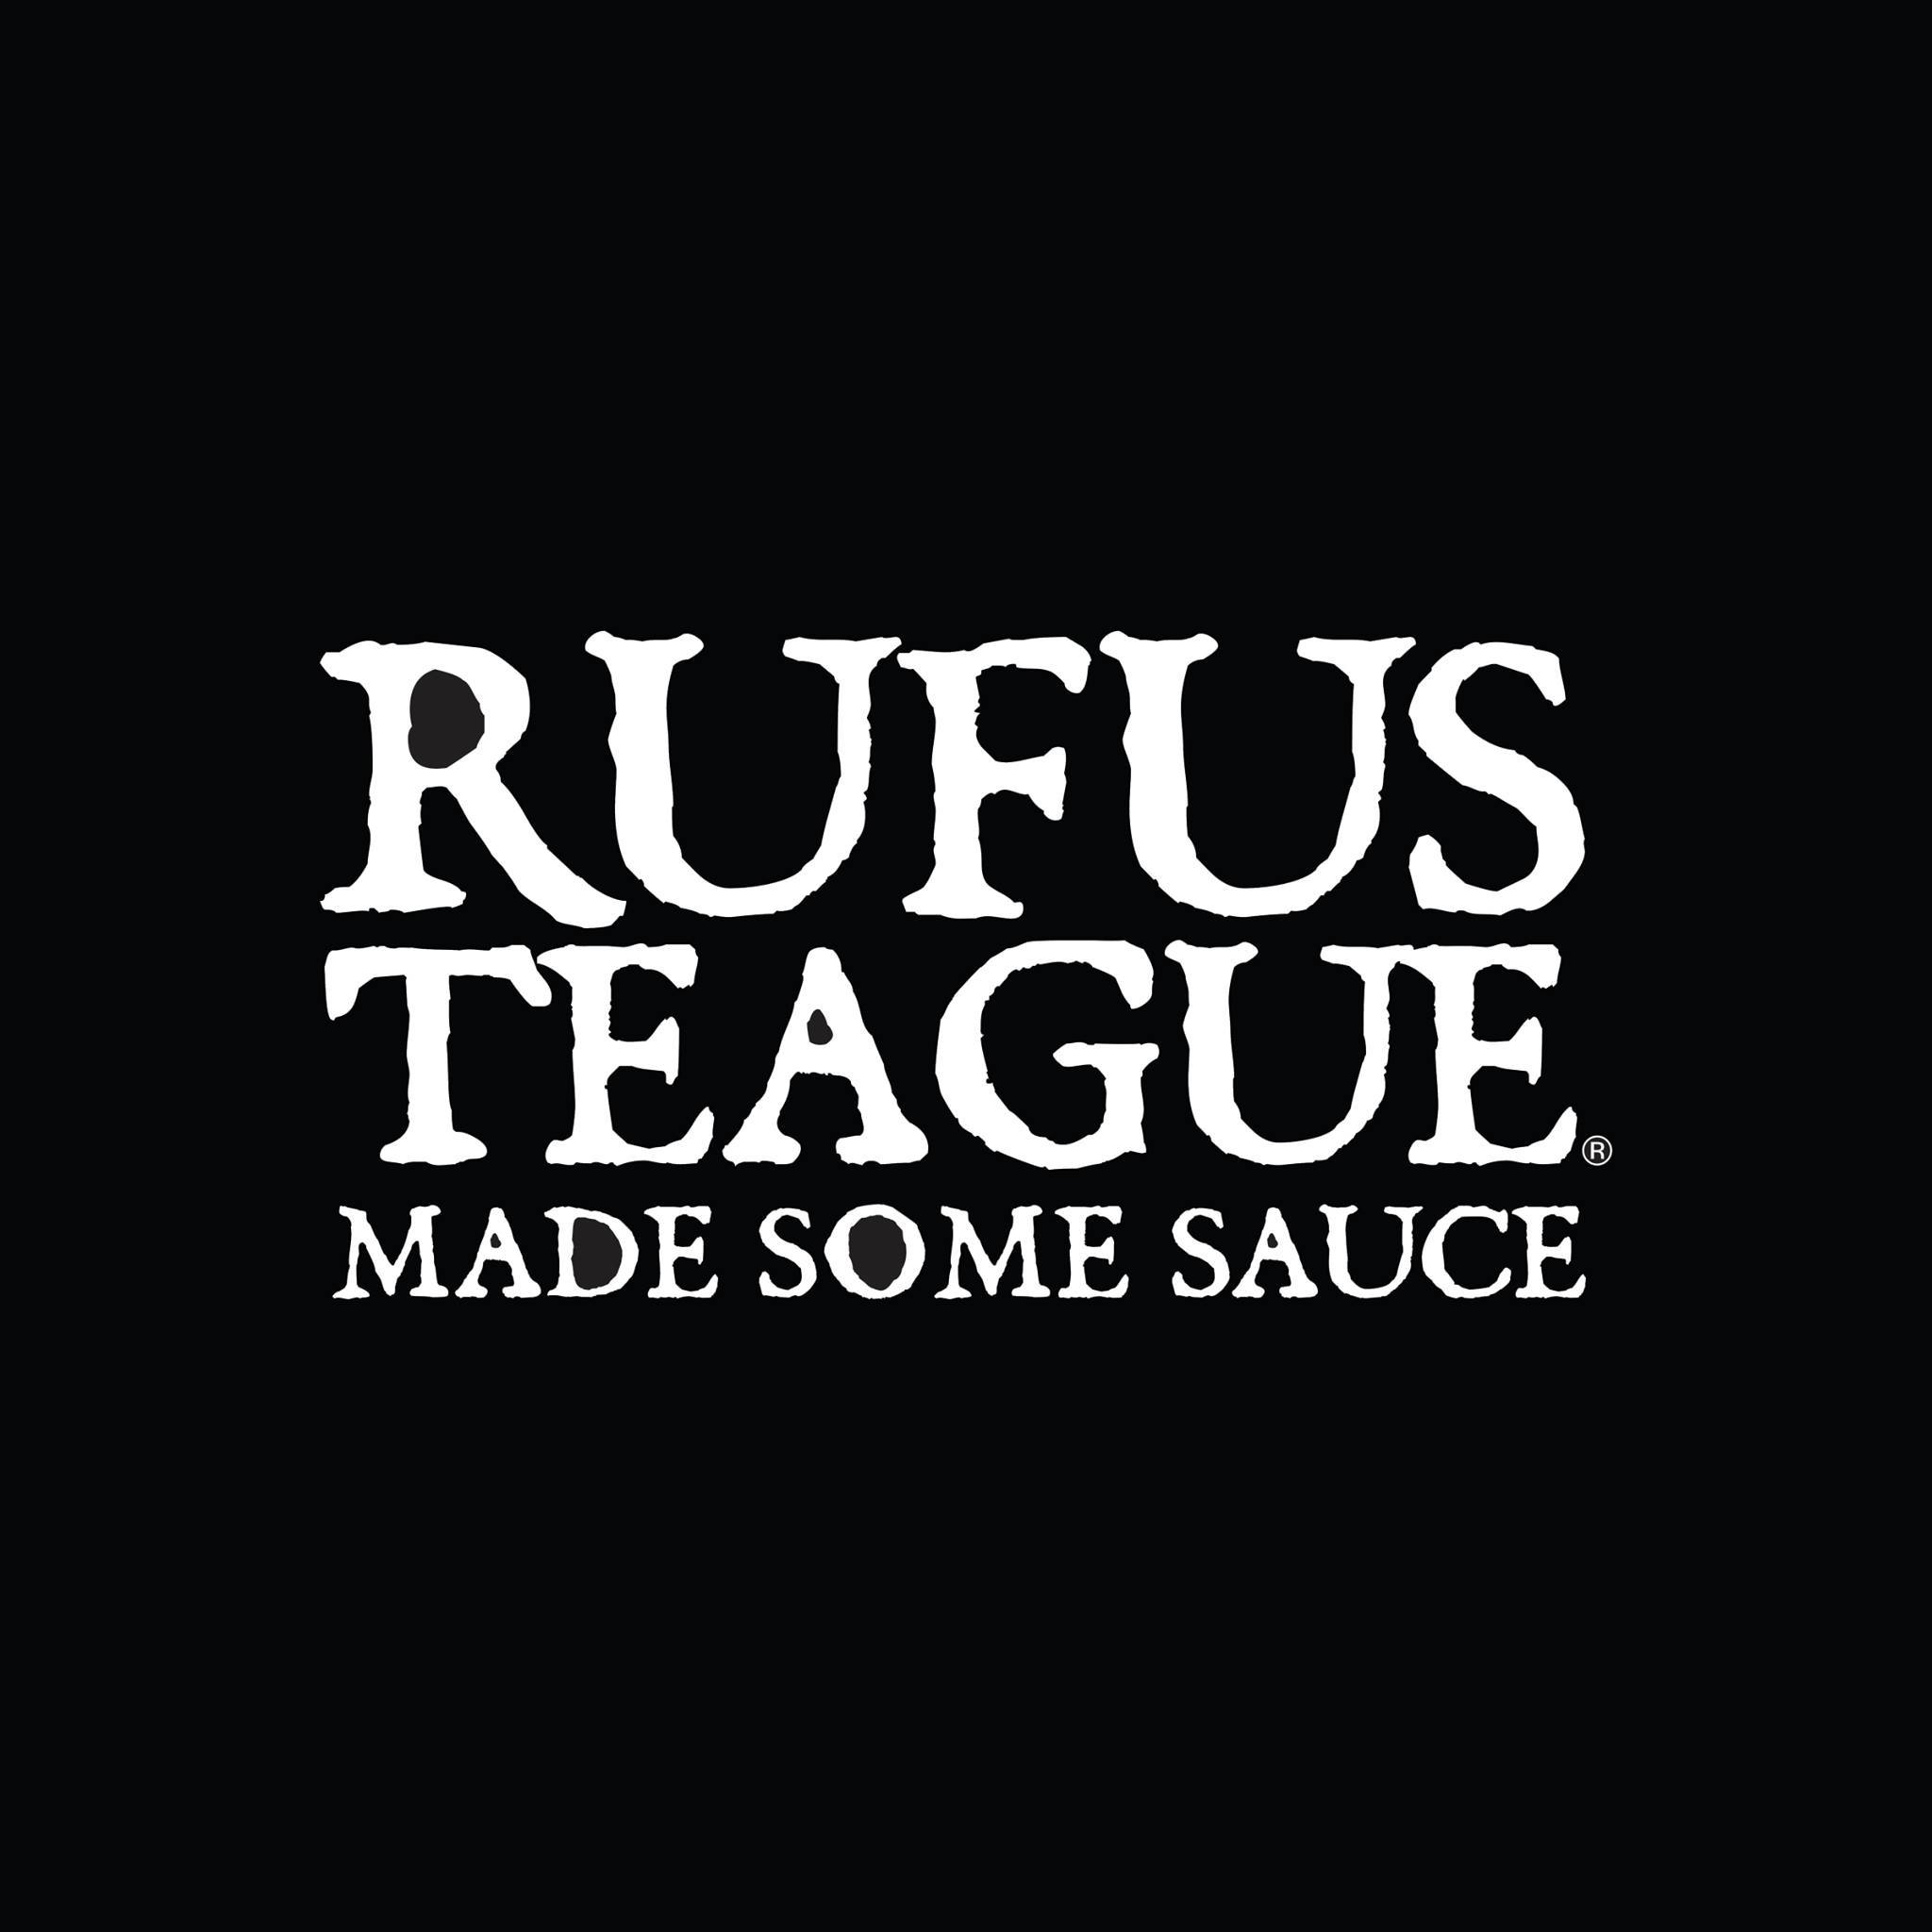 rufus-teague-logo